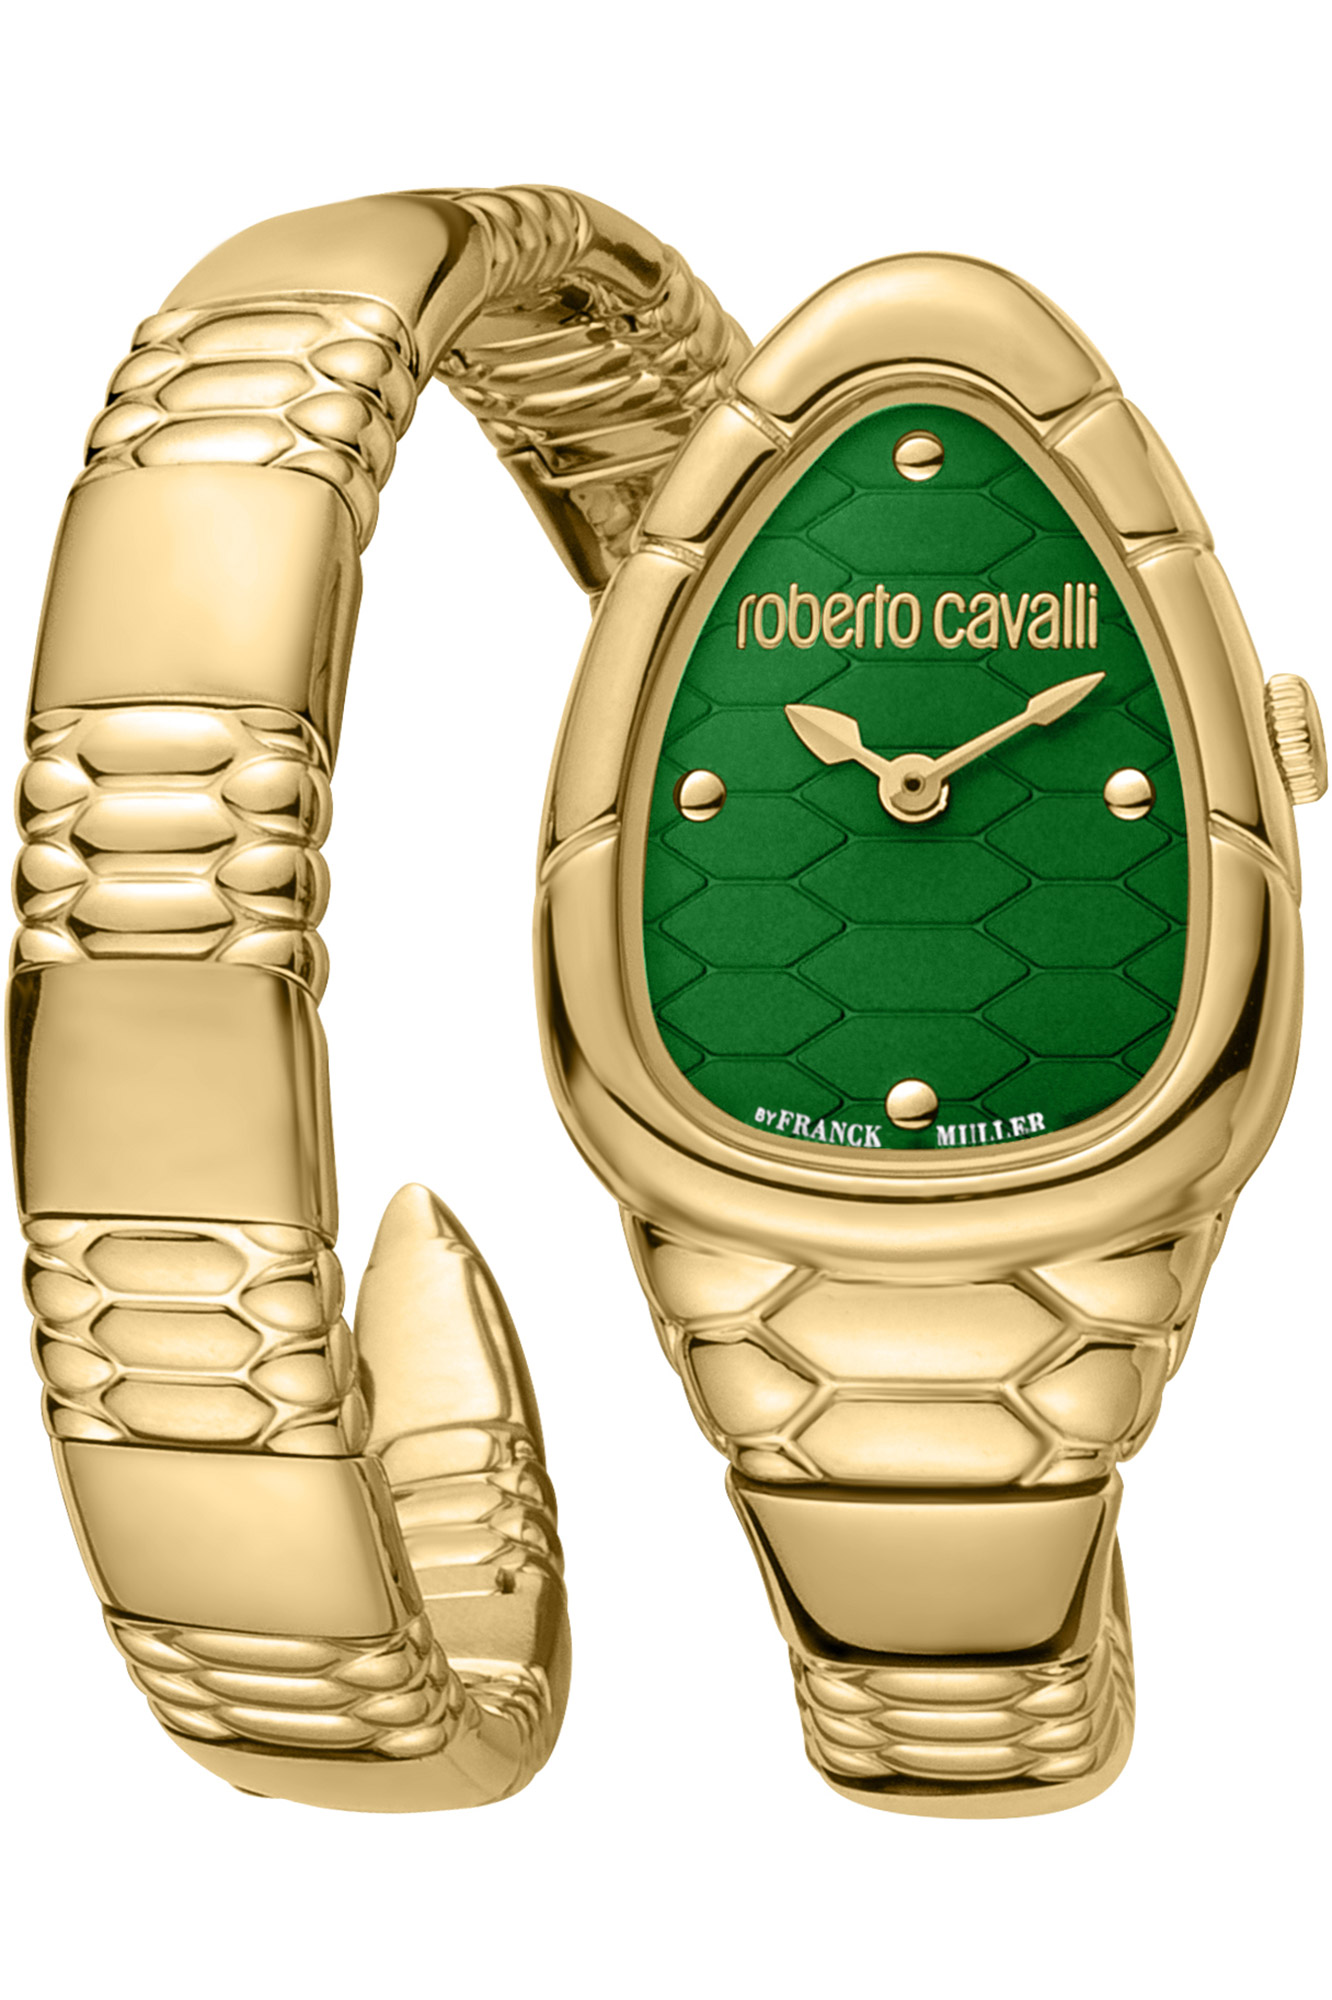 Reloj Roberto Cavalli by Franck Muller rv1l184m0041